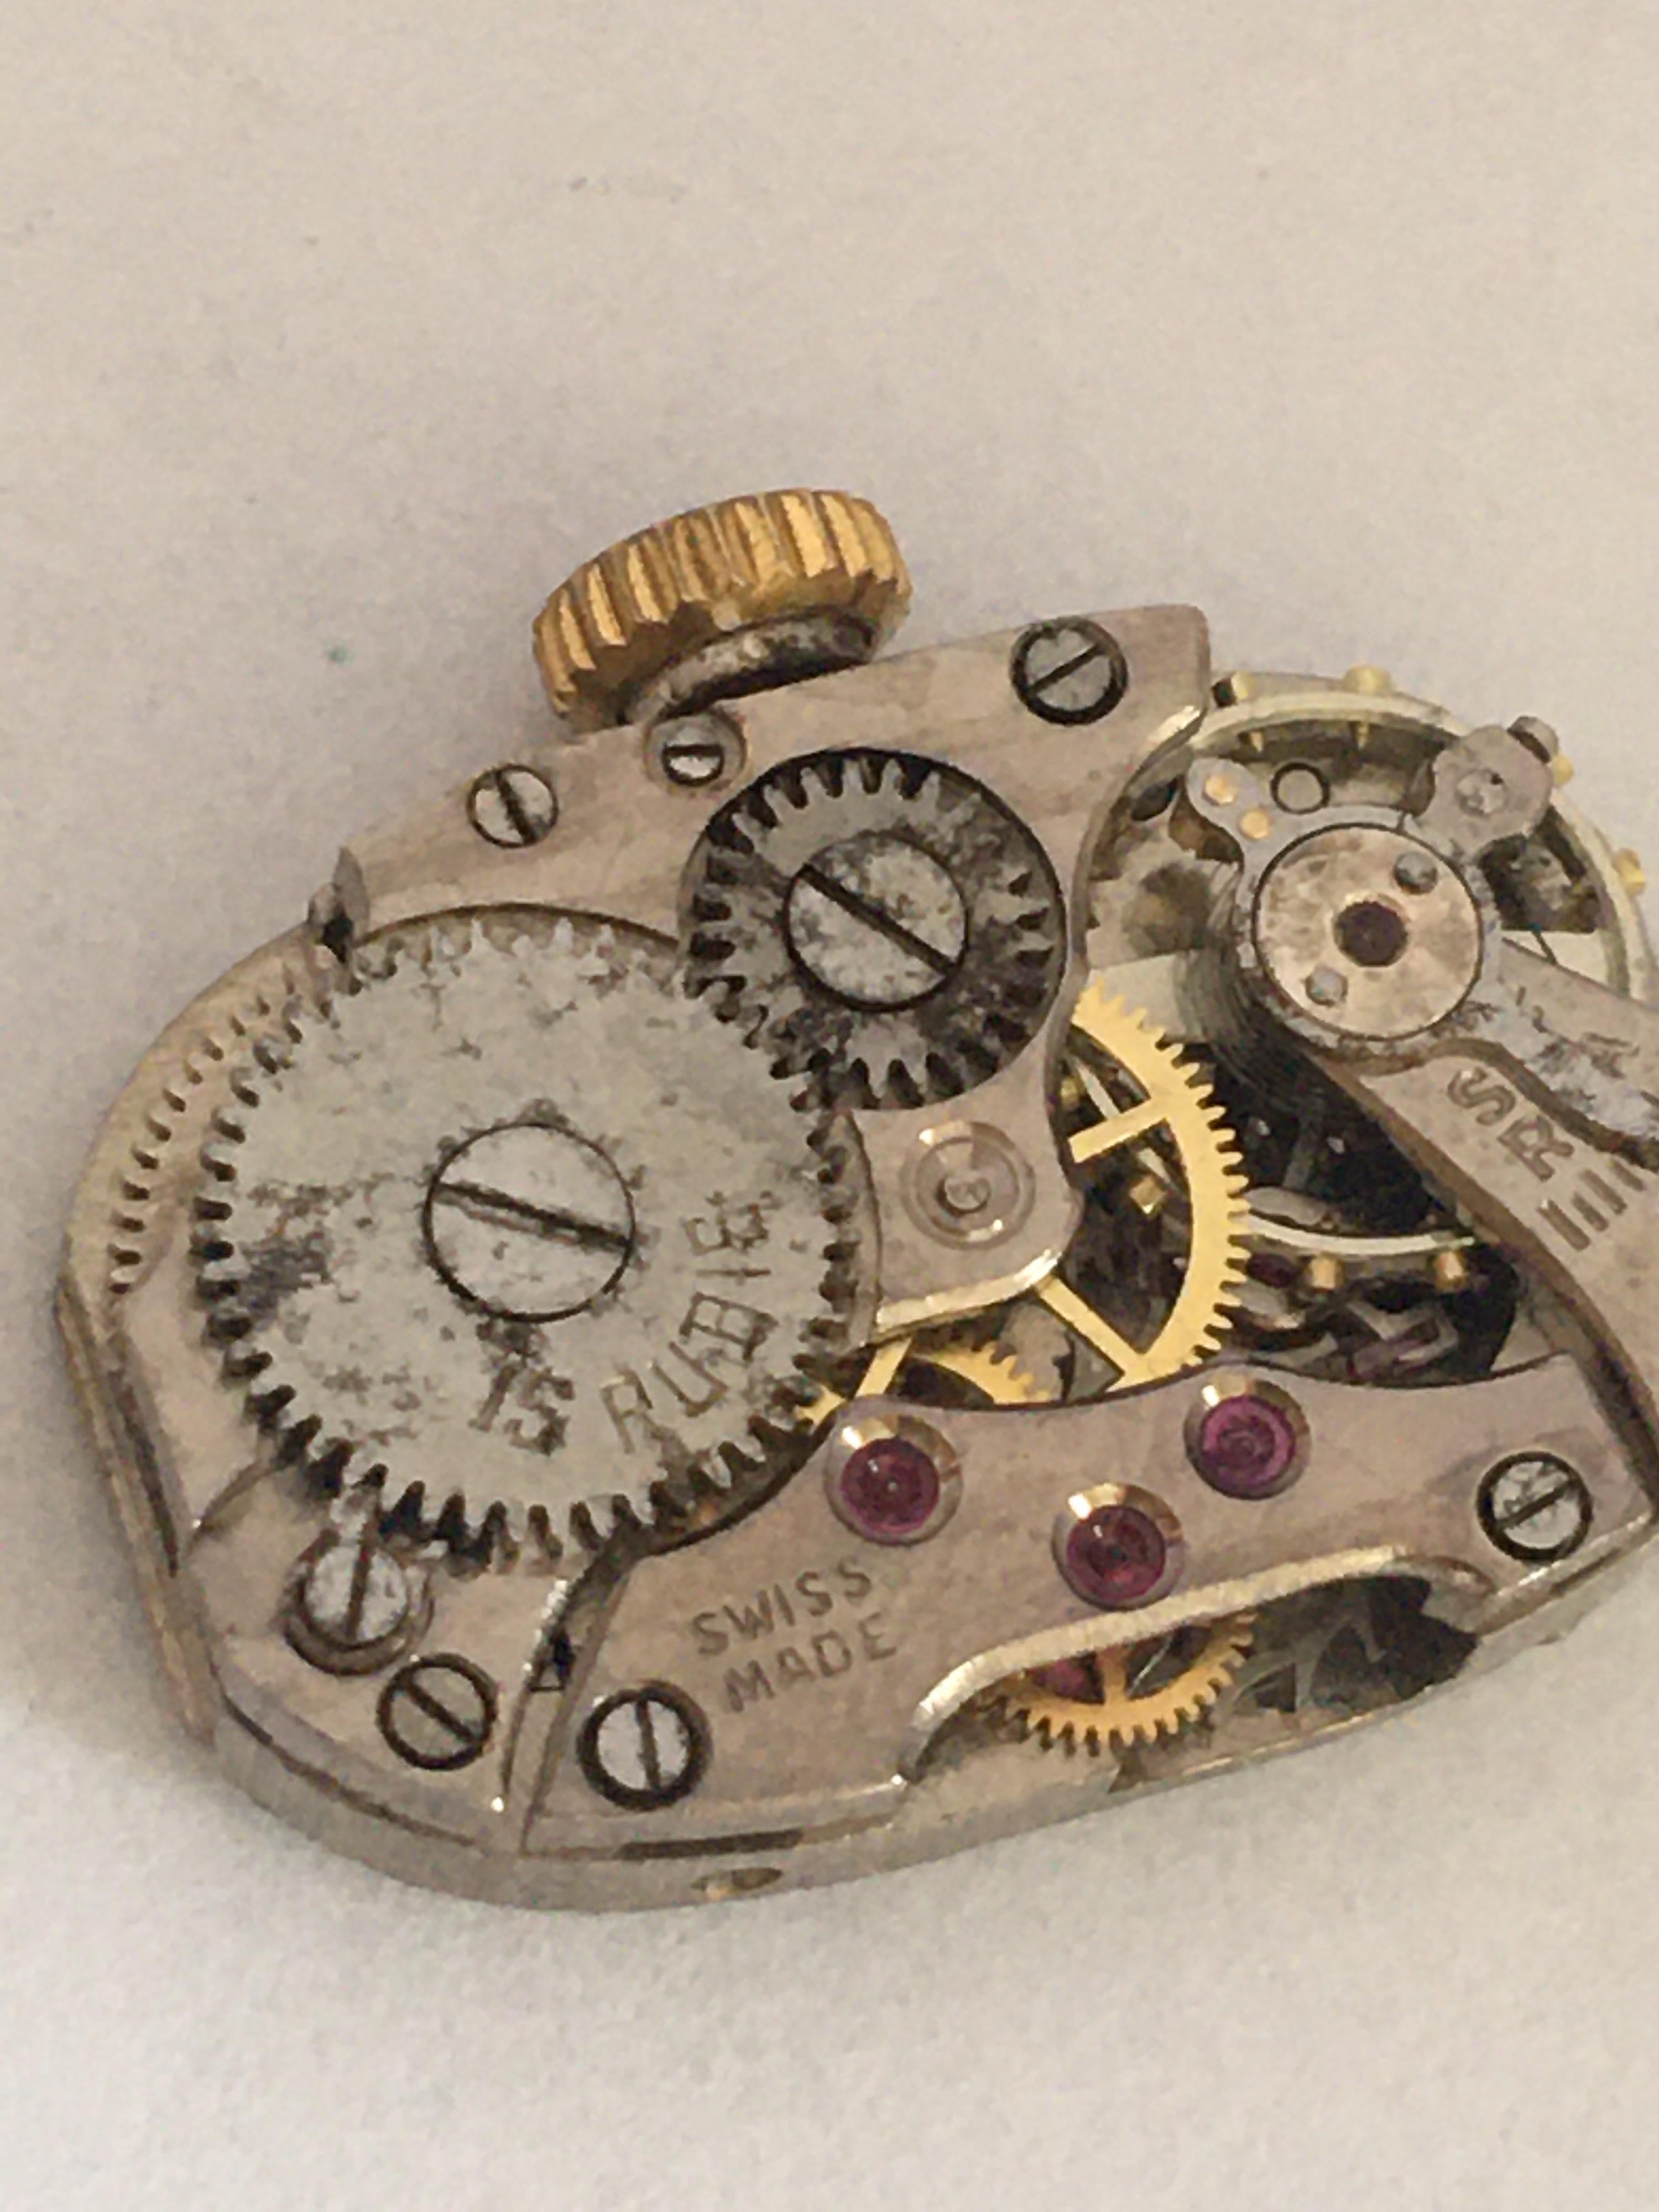 9 Karat Gold Vintage 1940s Ladies Square Mechanical Watch For Sale 1